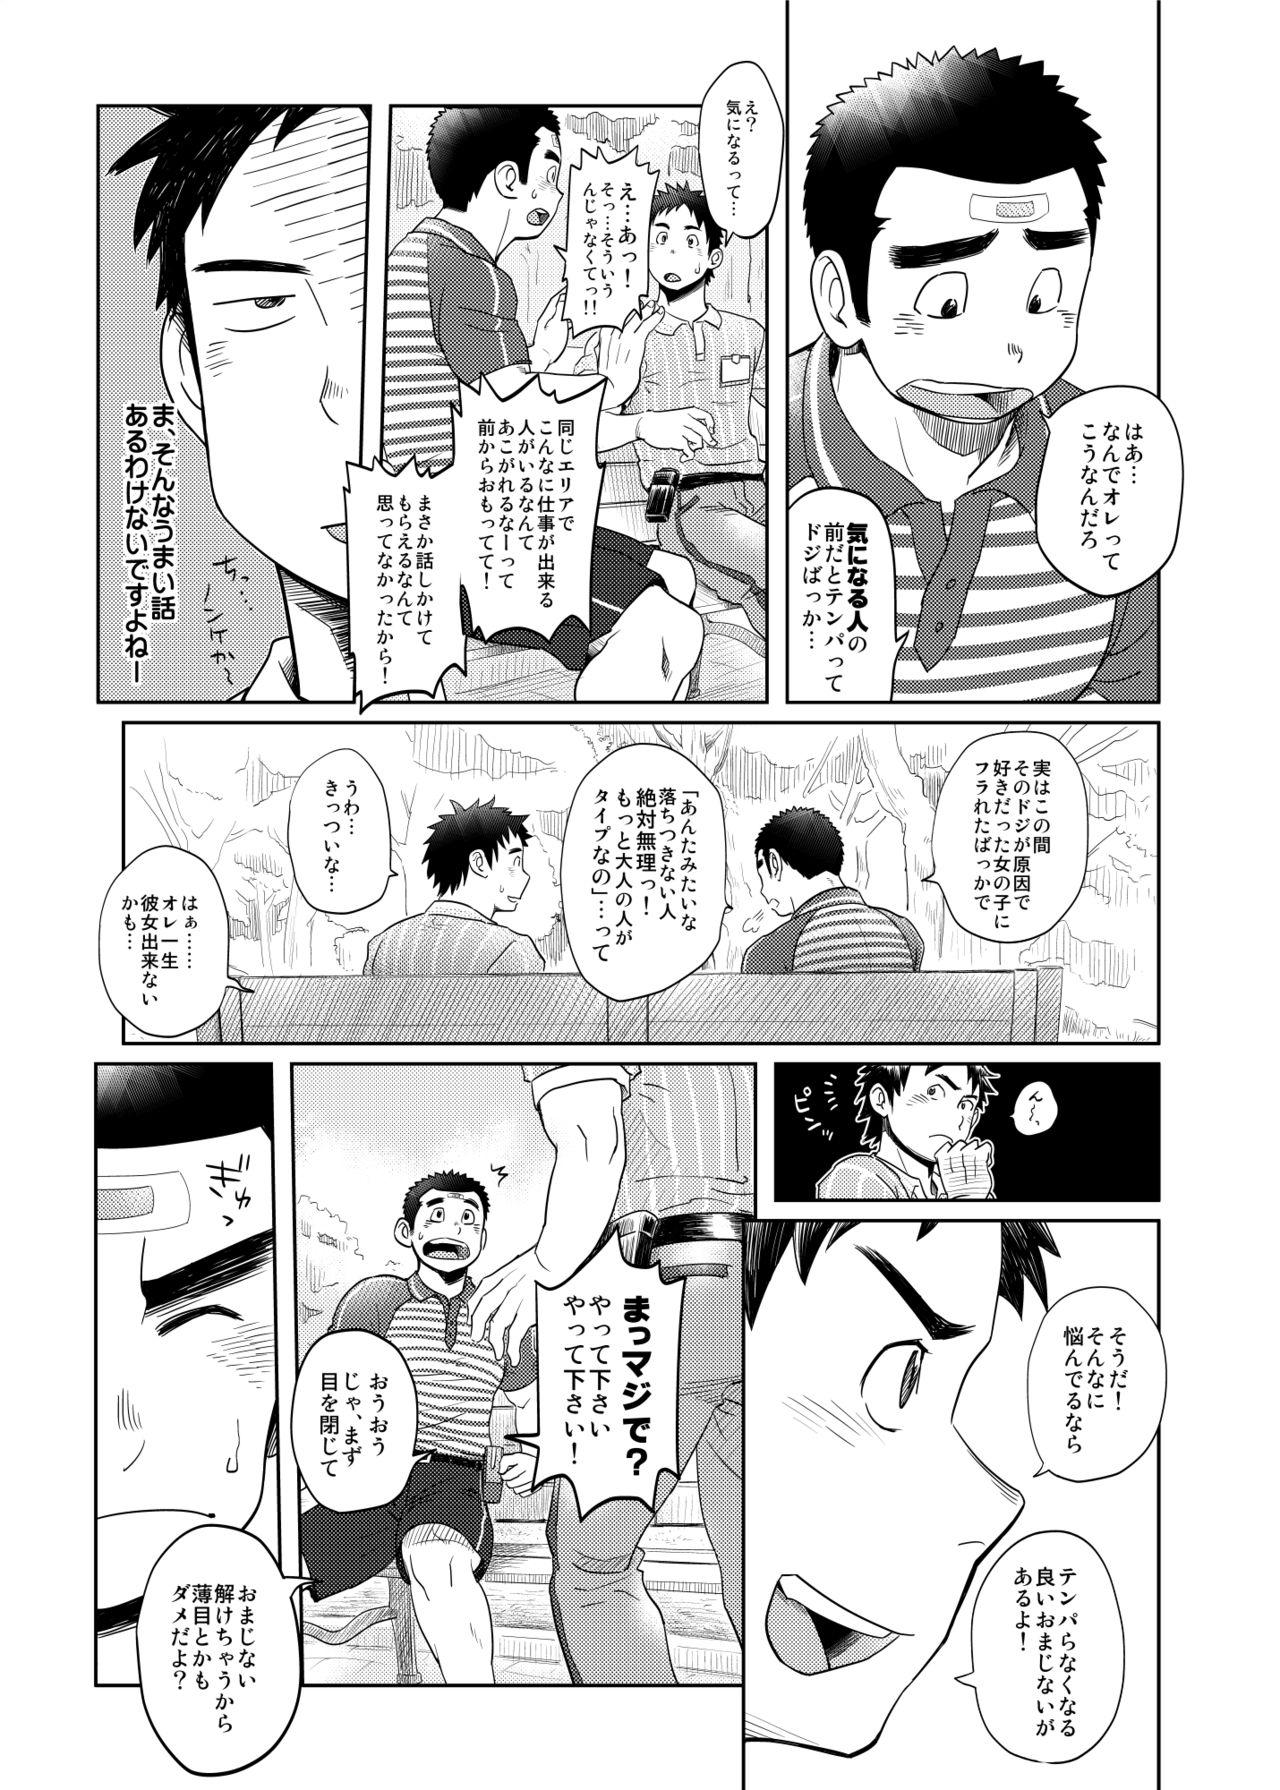 Rubdown Love Love Takuhai Onii-san 1 - Original 1080p - Page 6